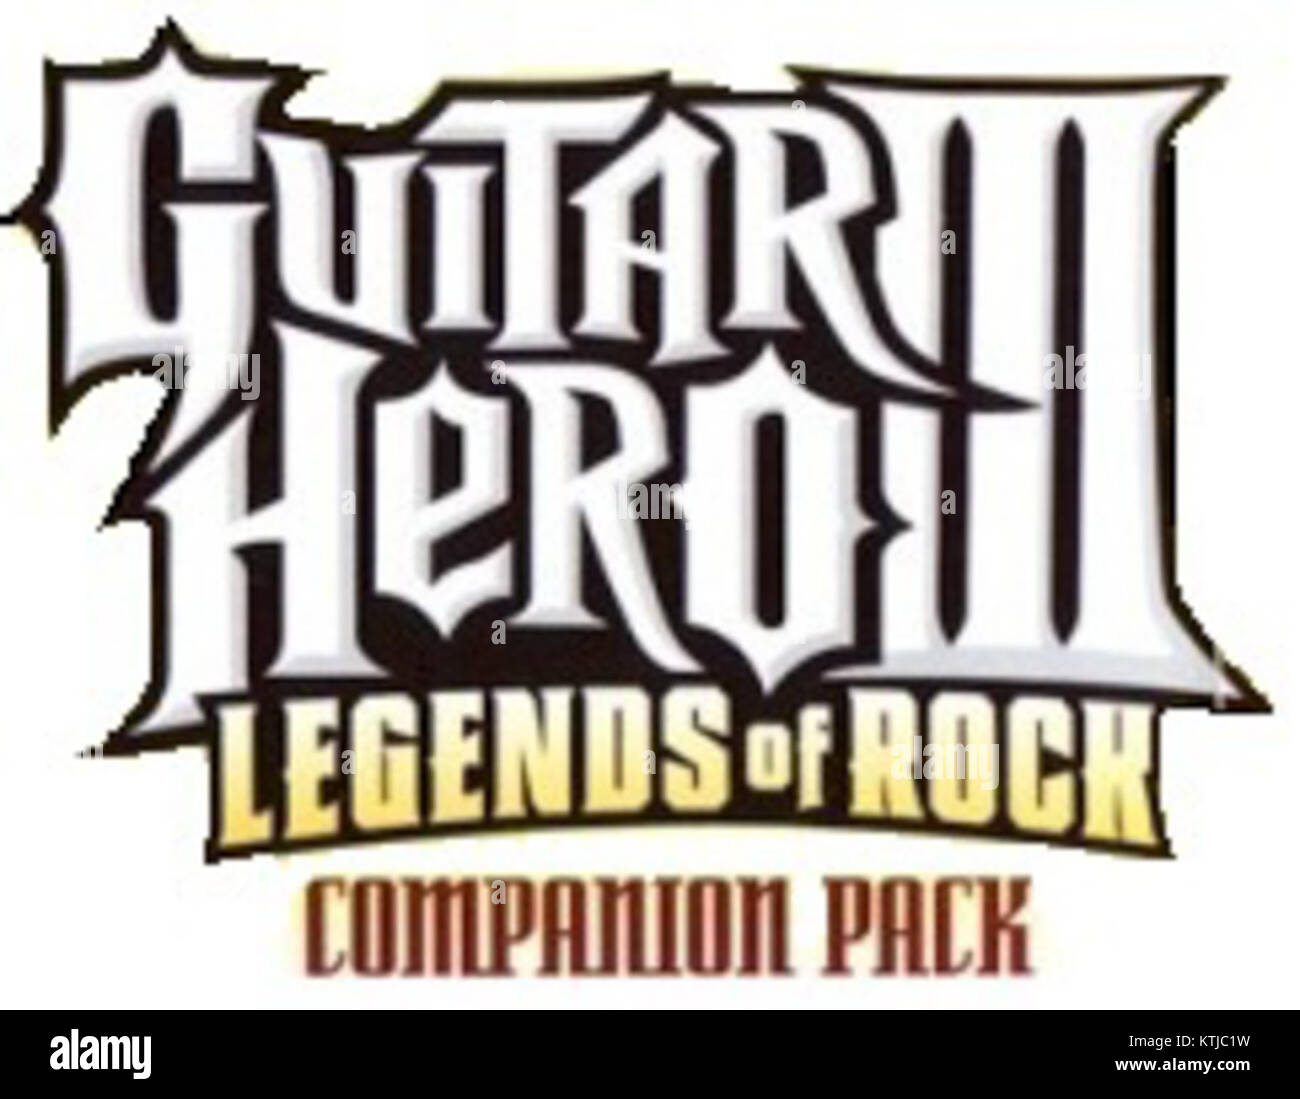 Guitar Hero III Legends of Rock Companion Pack Logo Stock Photo